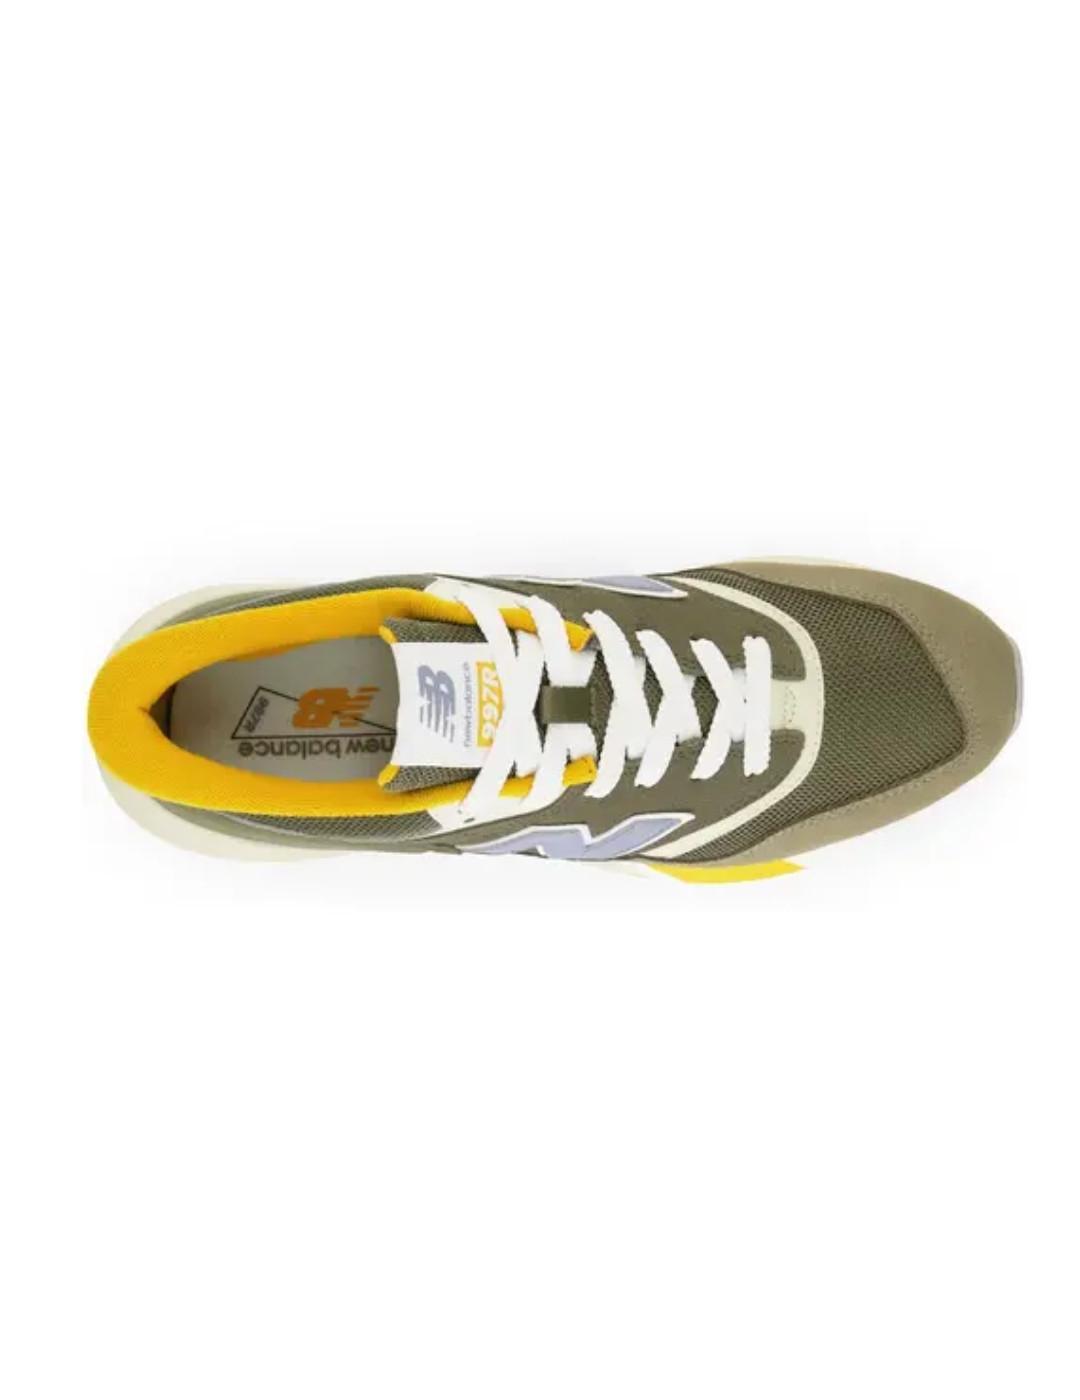 Zapatillas New Balance 997 verde/amarilla para hombre